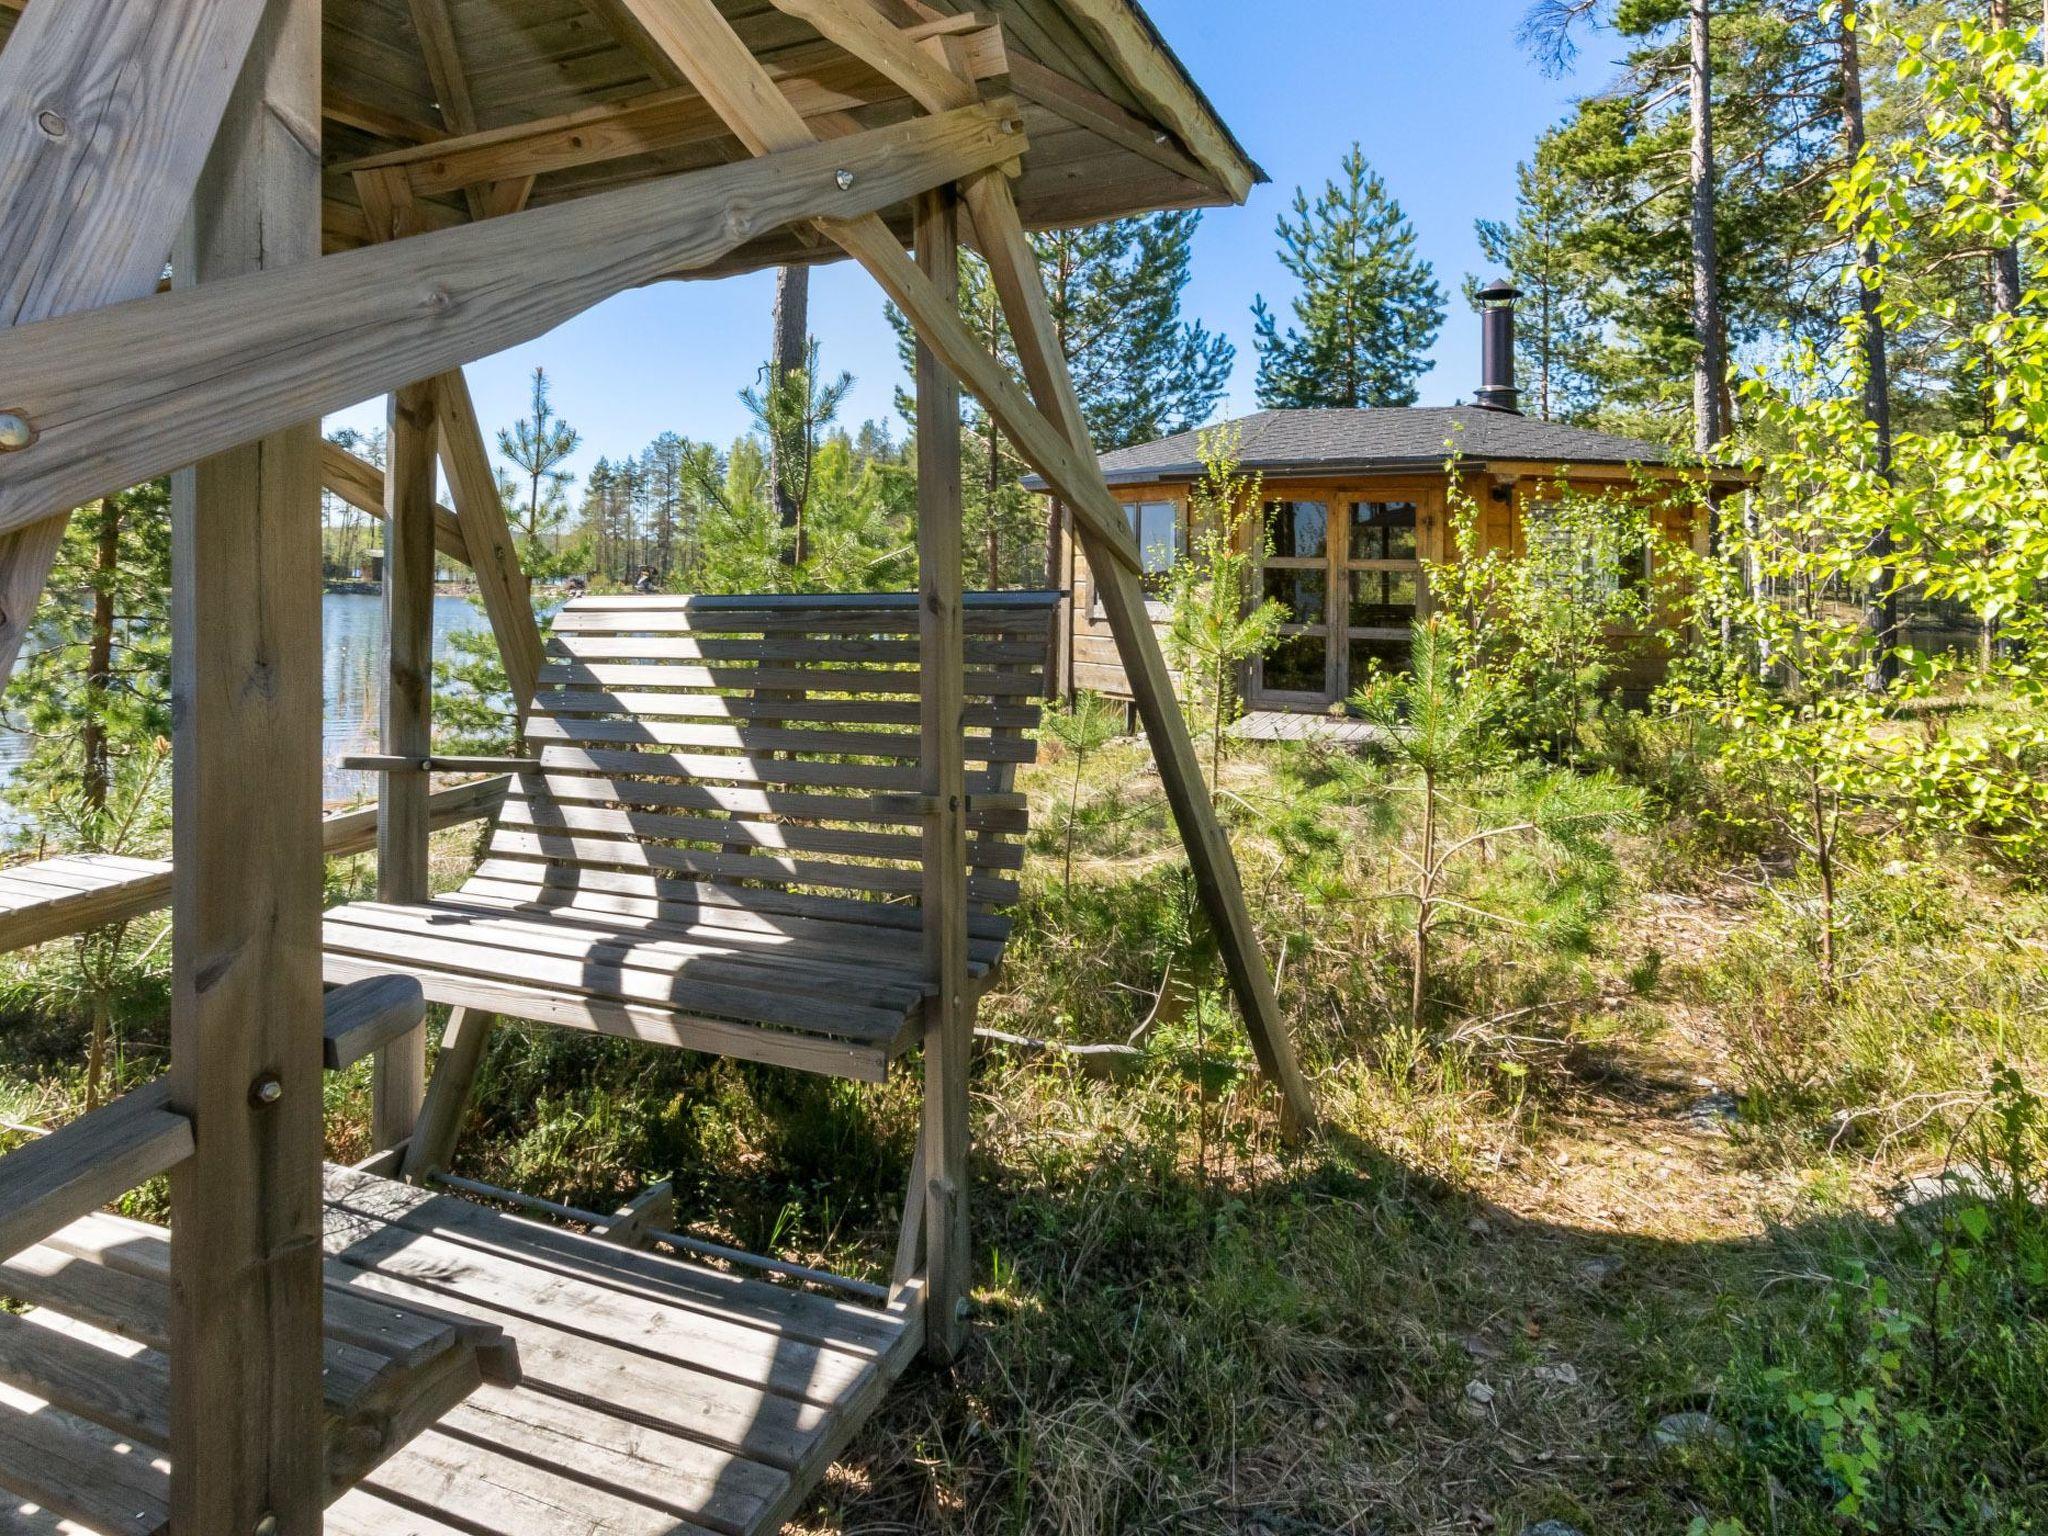 Photo 10 - 4 bedroom House in Savonlinna with sauna